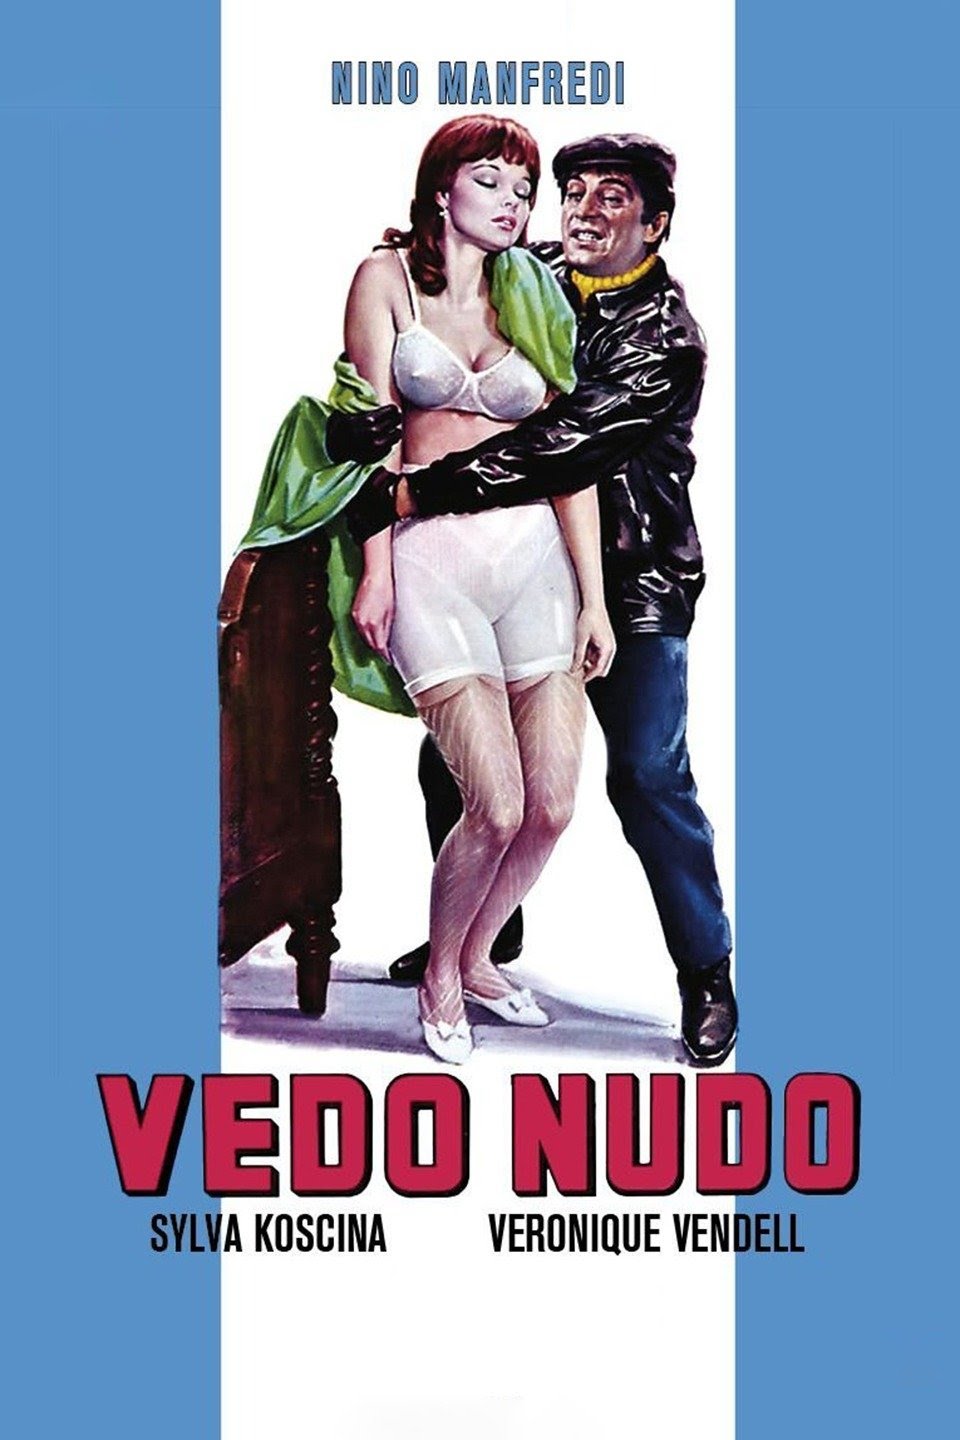 Vedo nudo [HD] (1969)